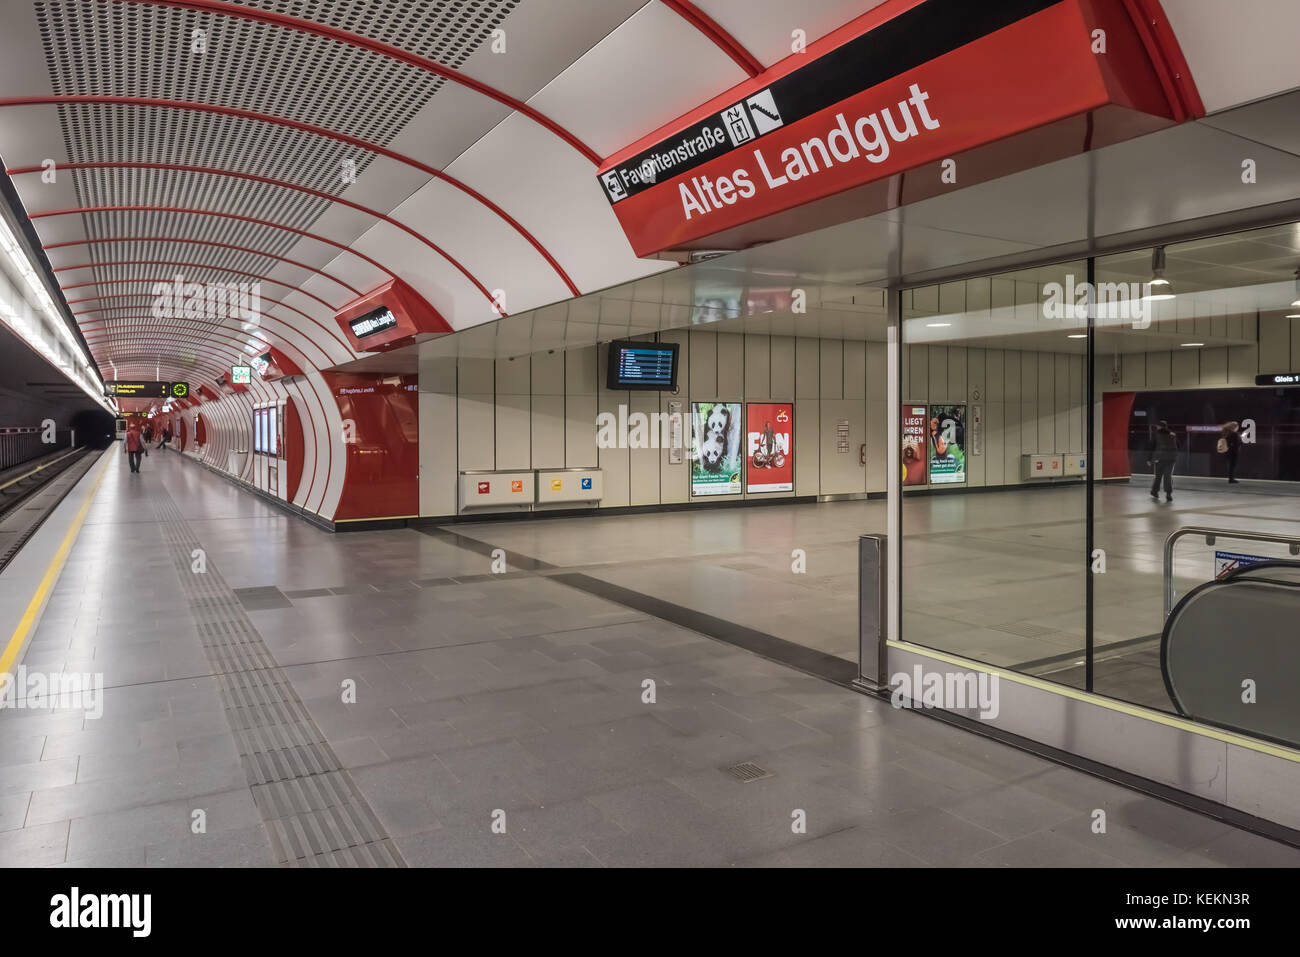 Wien, U-Bahn-Linie U1, Station Altes Landgut Stock Photo